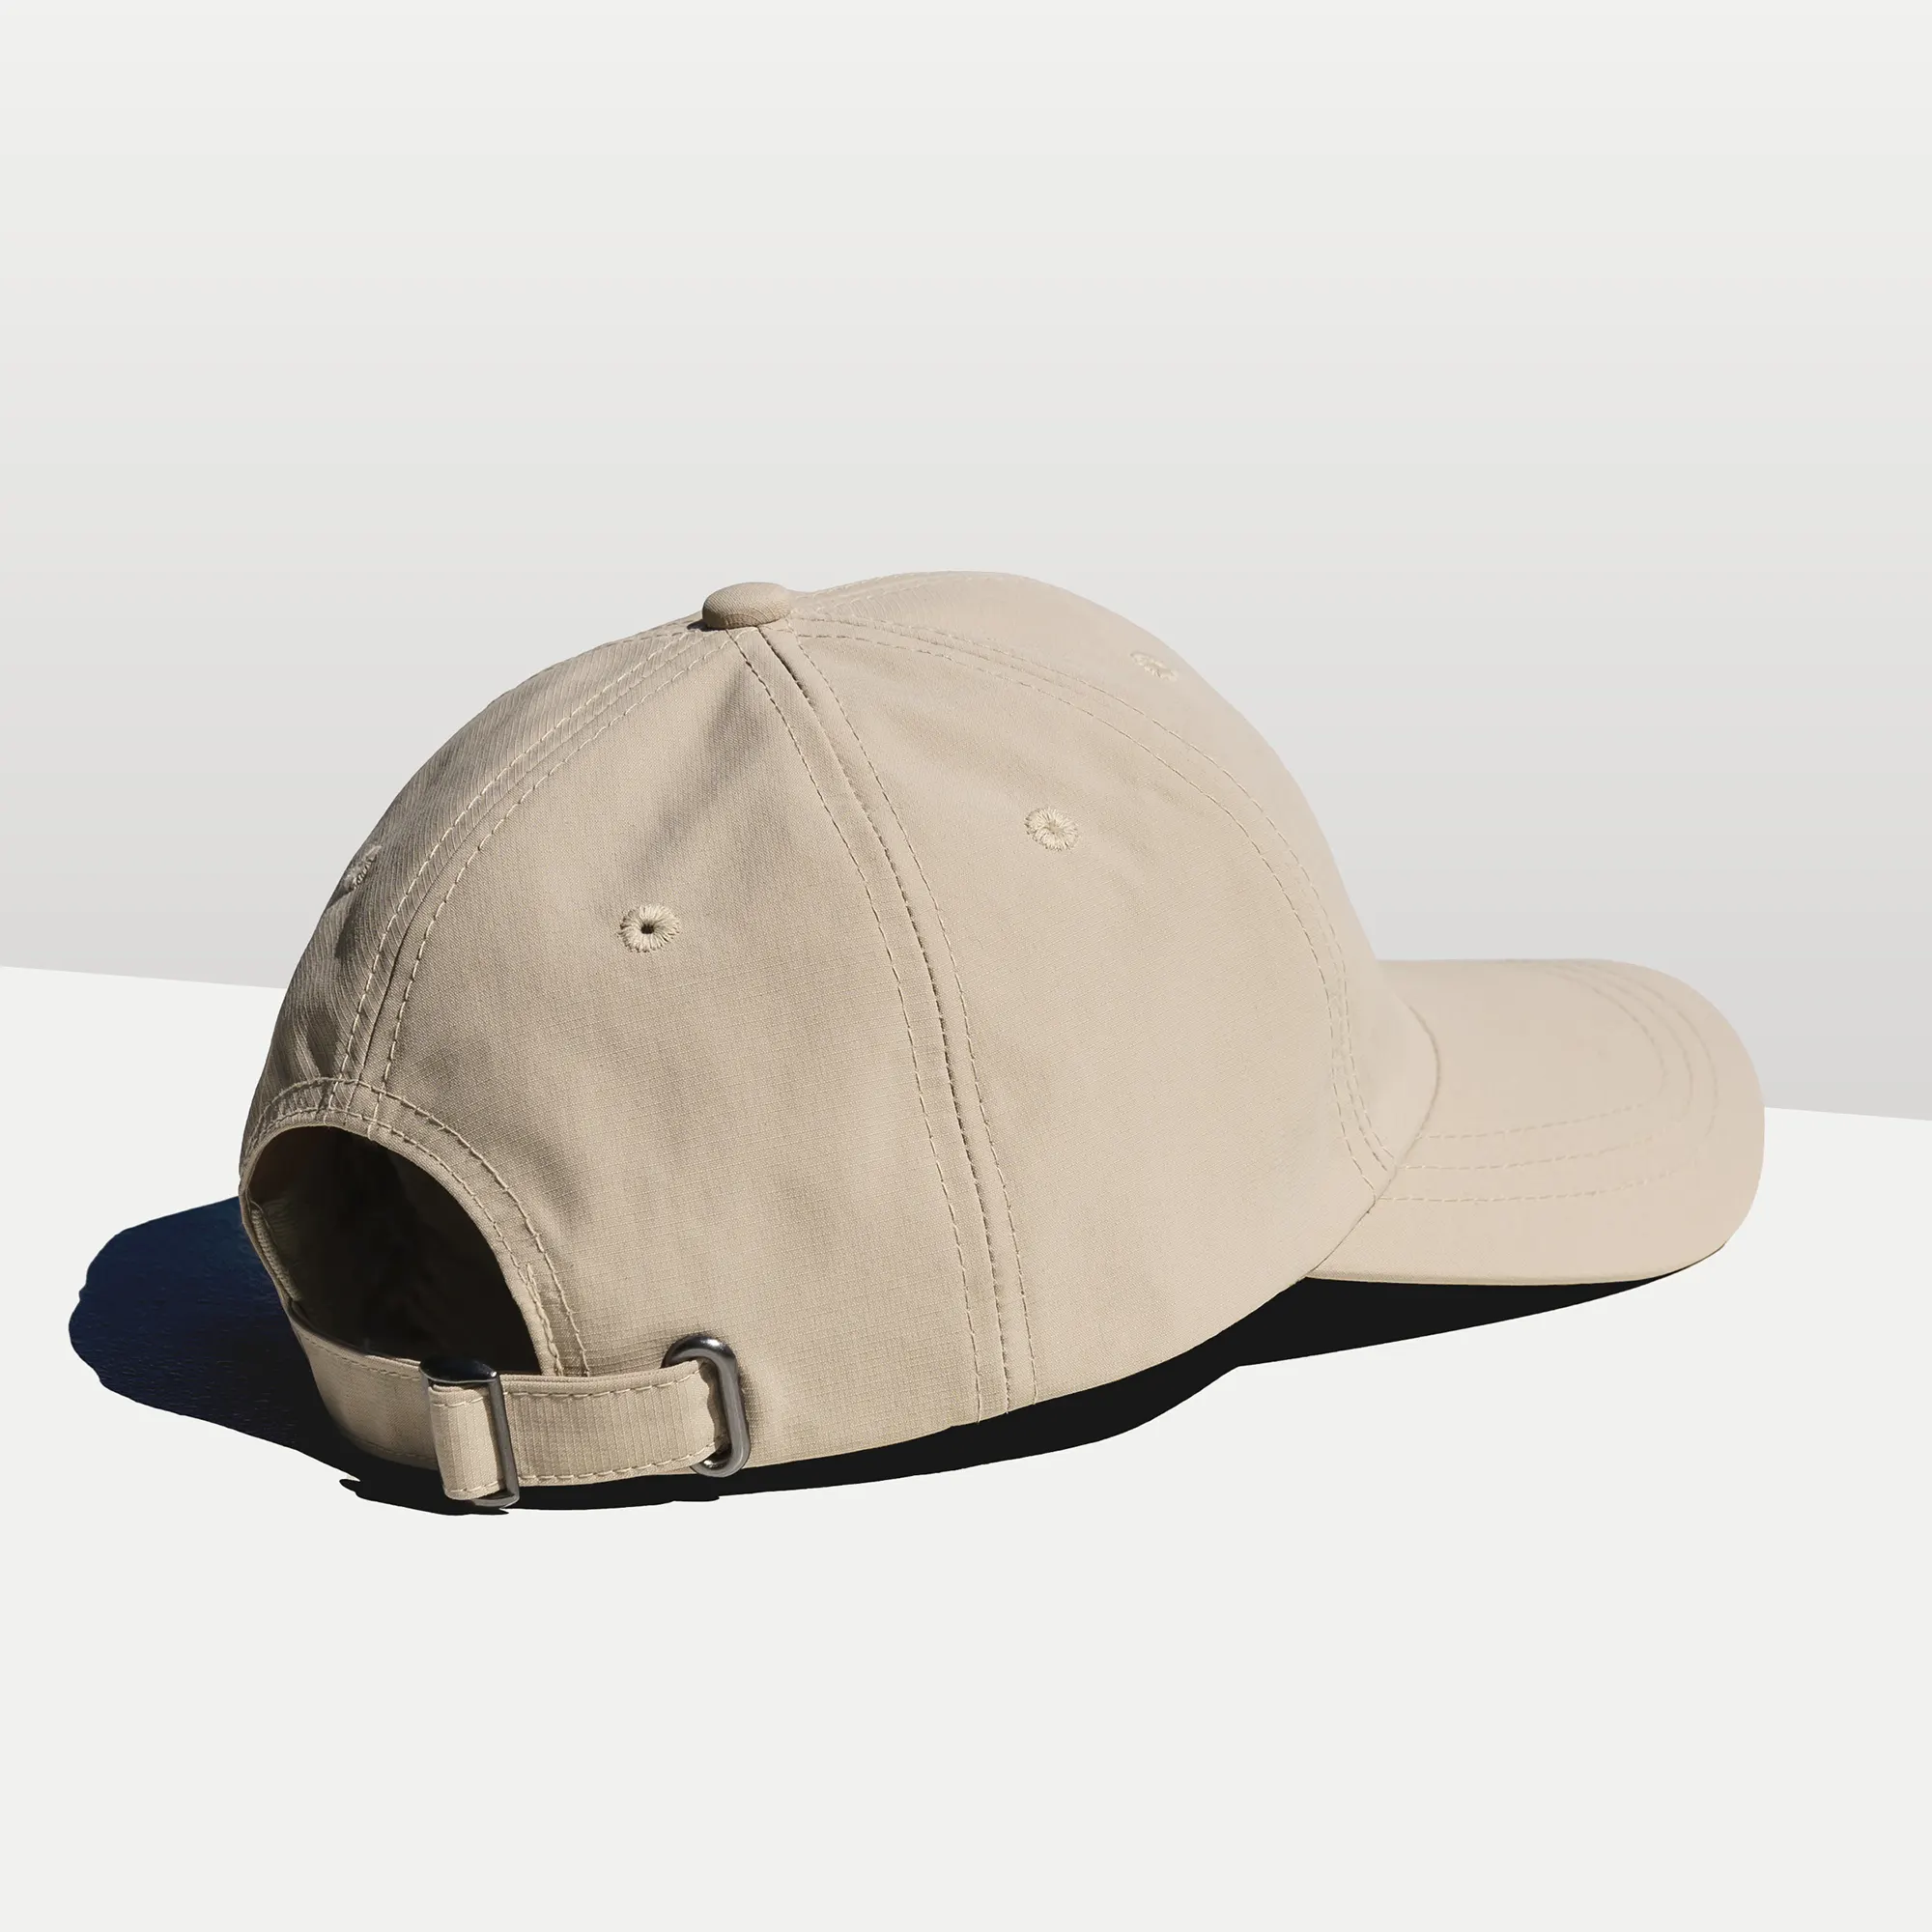 Entdecke die Hat of Growth von Business Nomad: stilvolle 6-Panel-Baseball-Cap aus Mini Ripstop Fabric in khaki